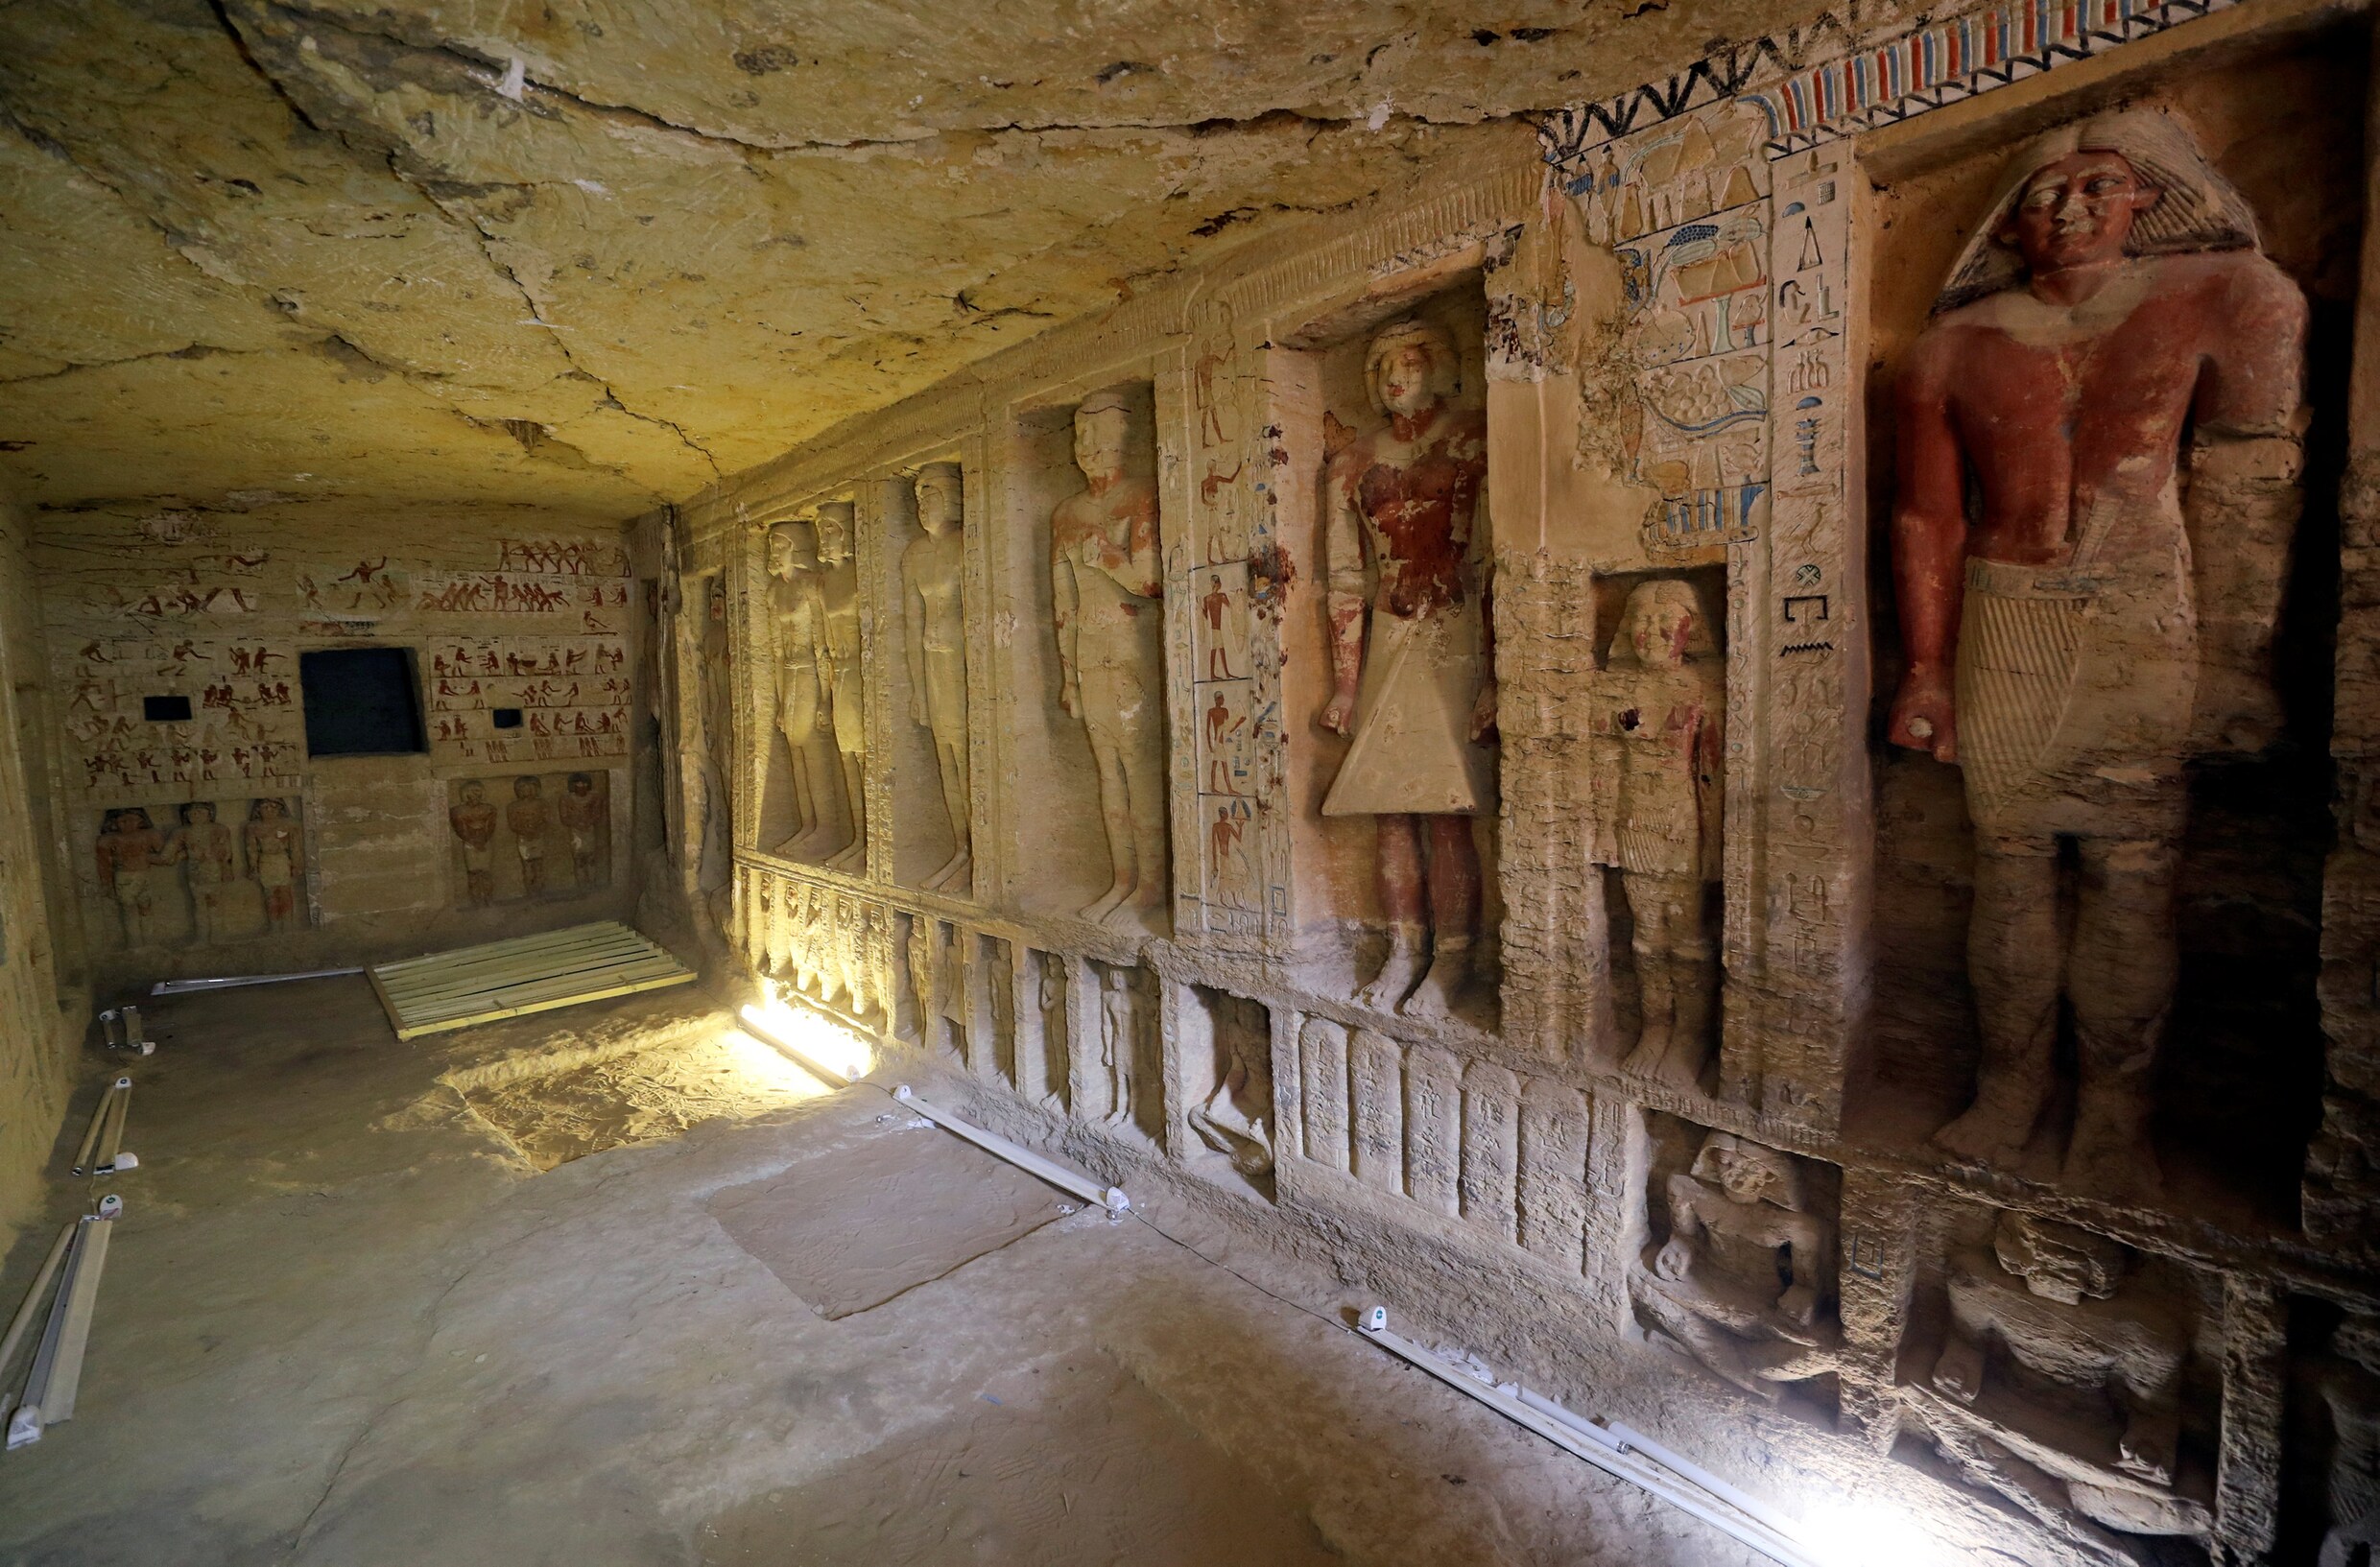 Graf van meer dan 4.400 jaar oud ontdekt in Egypte